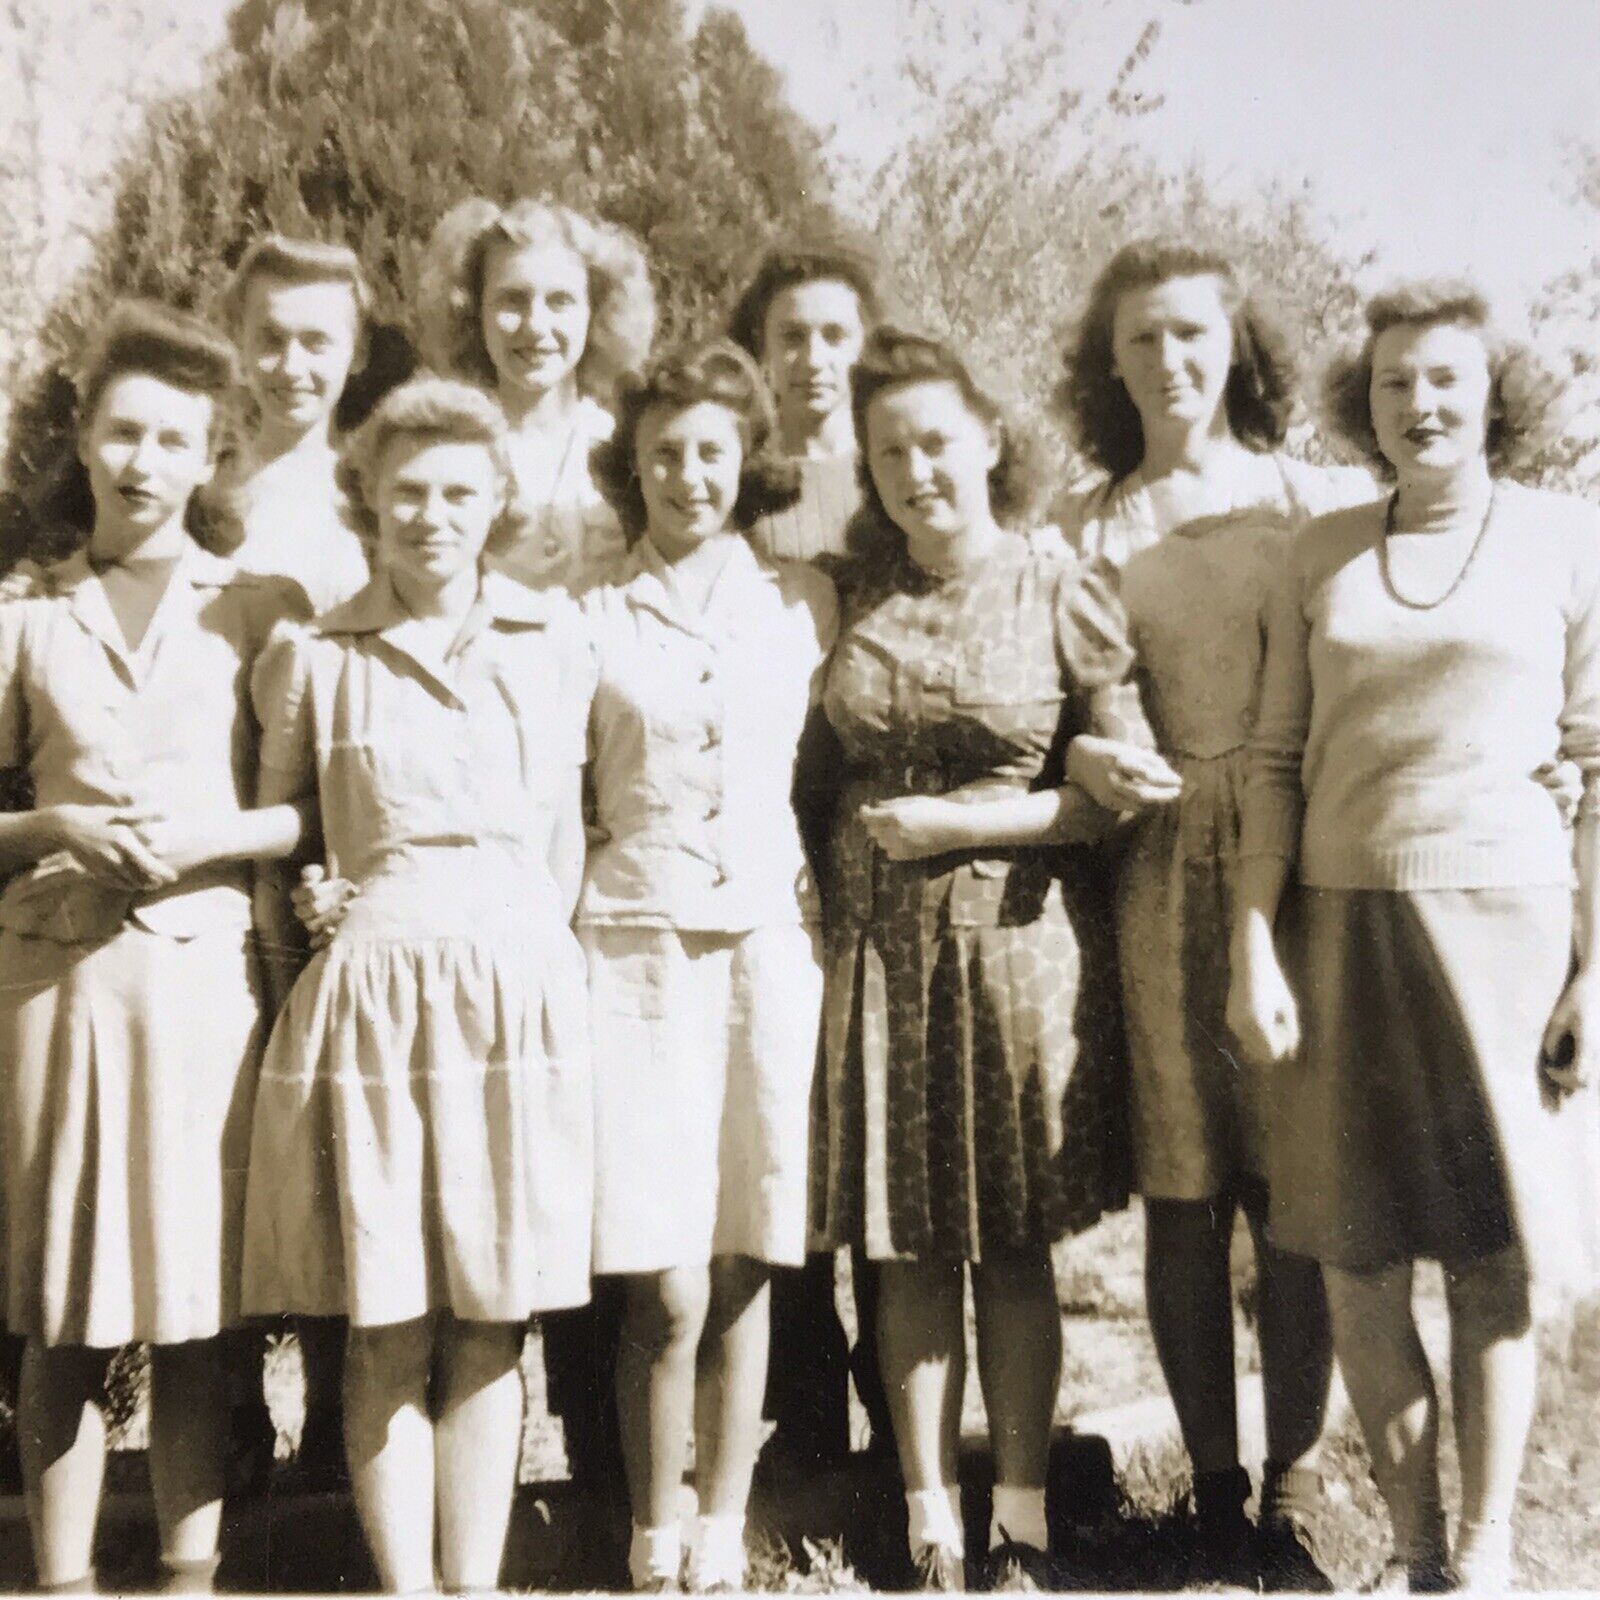 Women Ladies Group Kozak family Photograph Vintage Old Photo Dresses 1940s